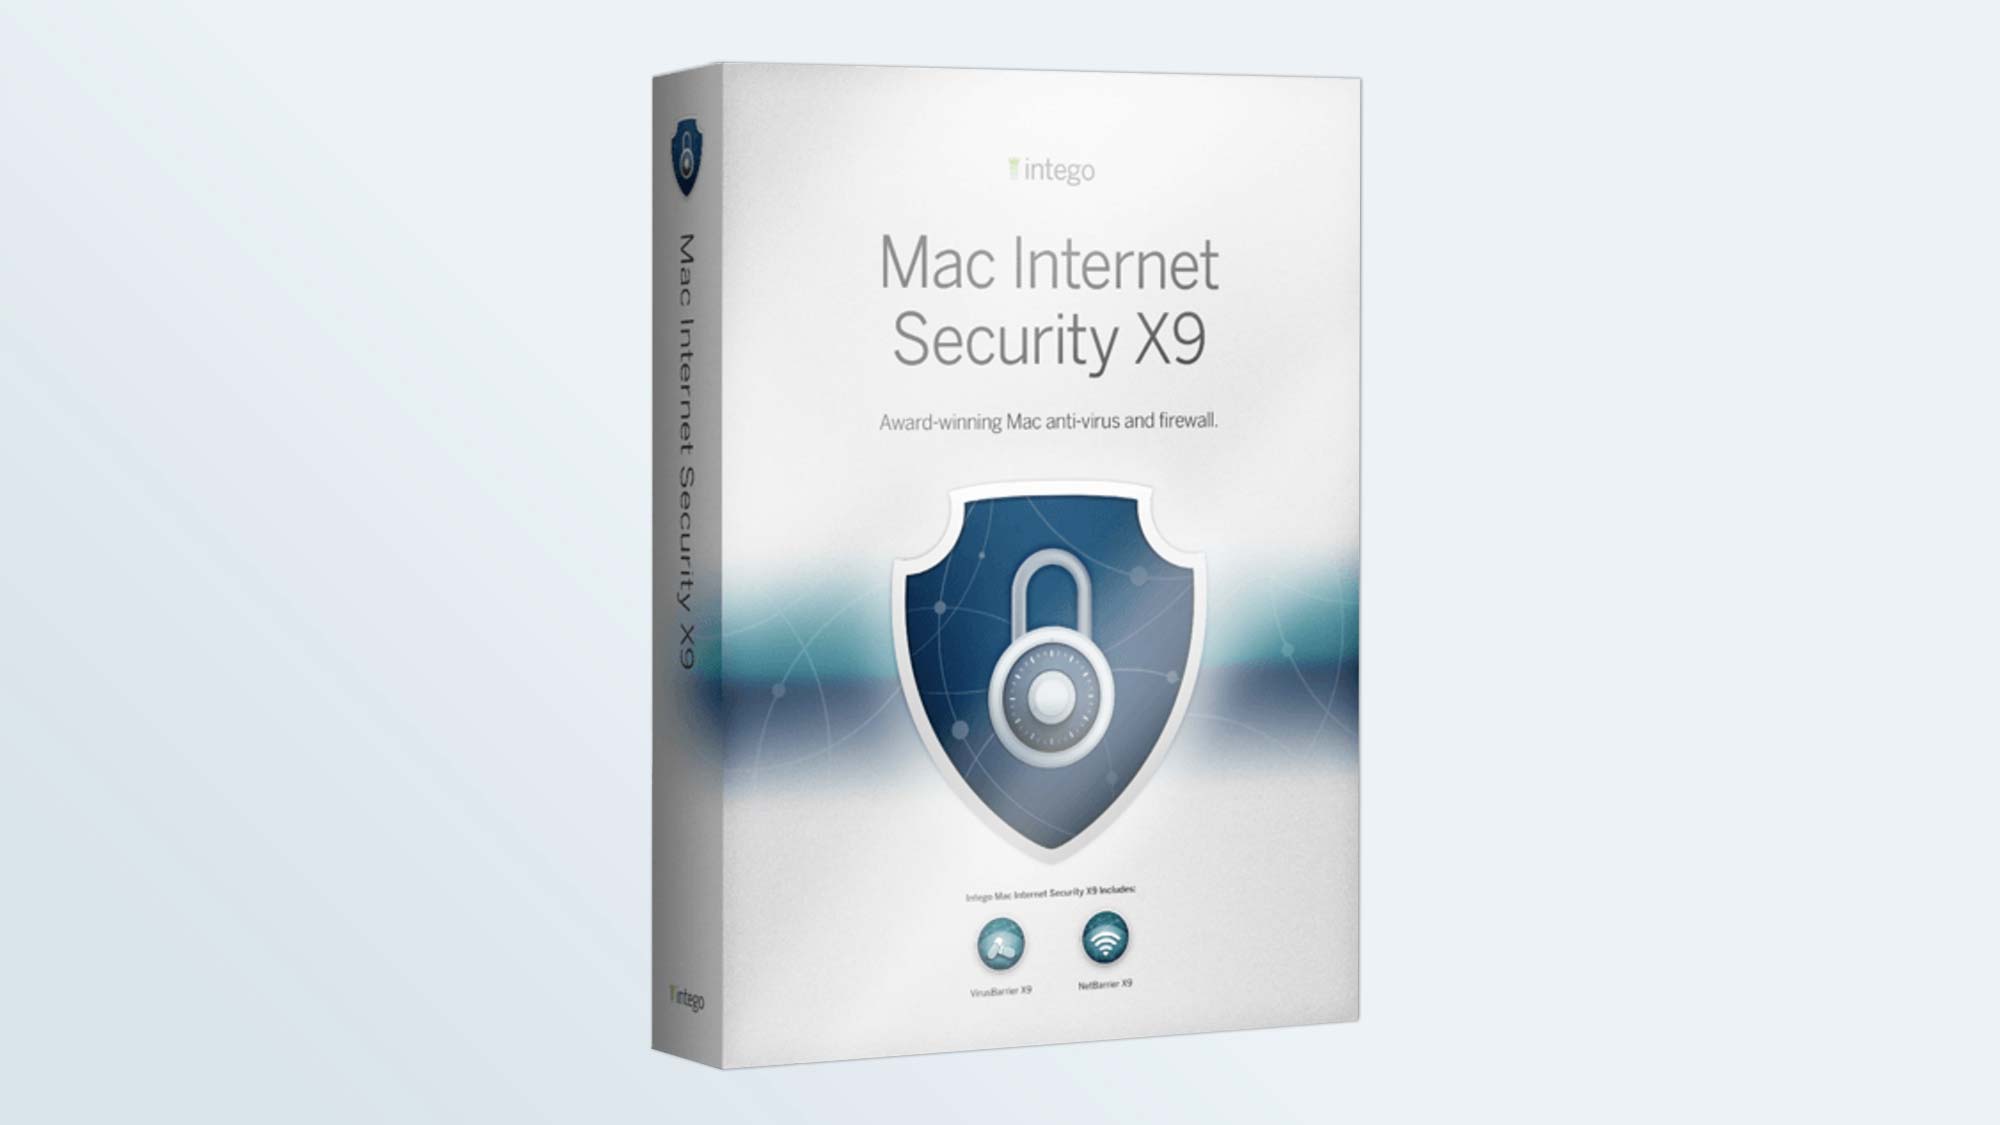 Best Mac antivirus: Intego Mac Internet Security X9 review